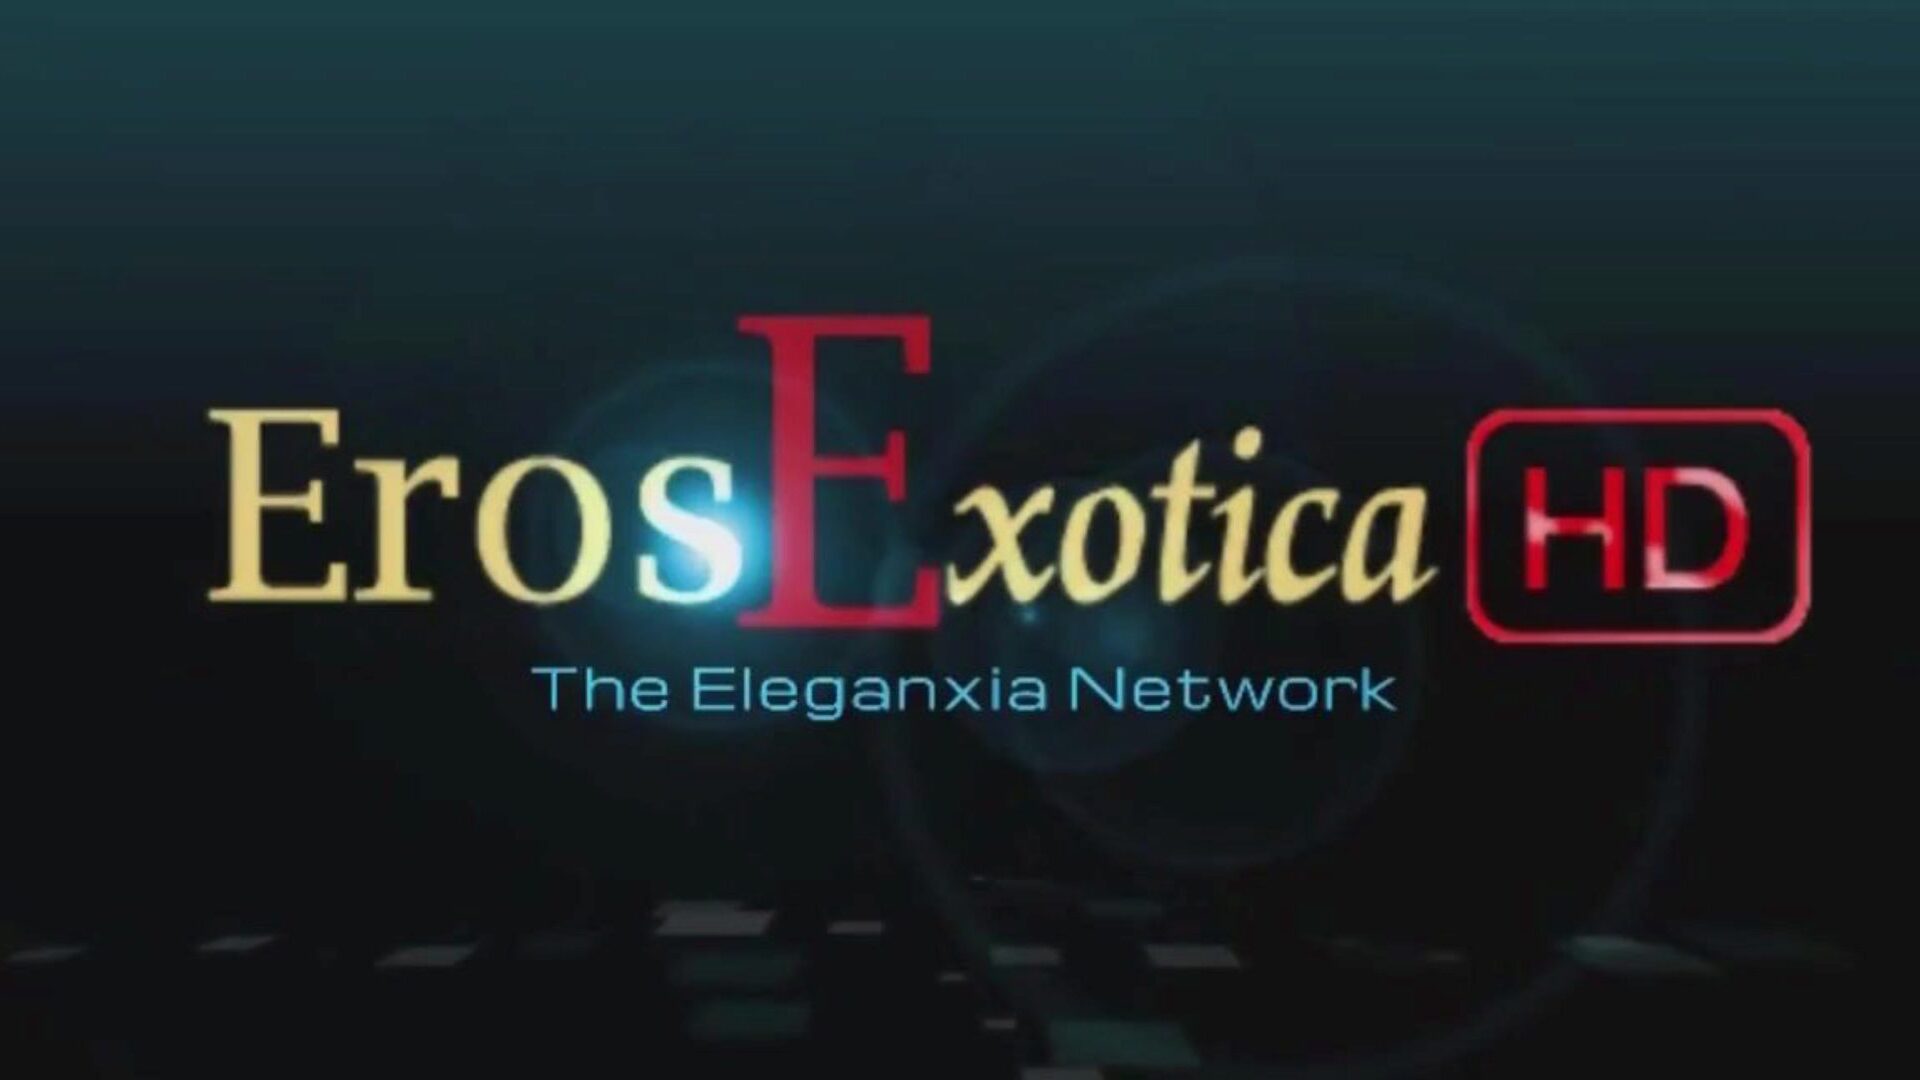 Eros Exotica Hd